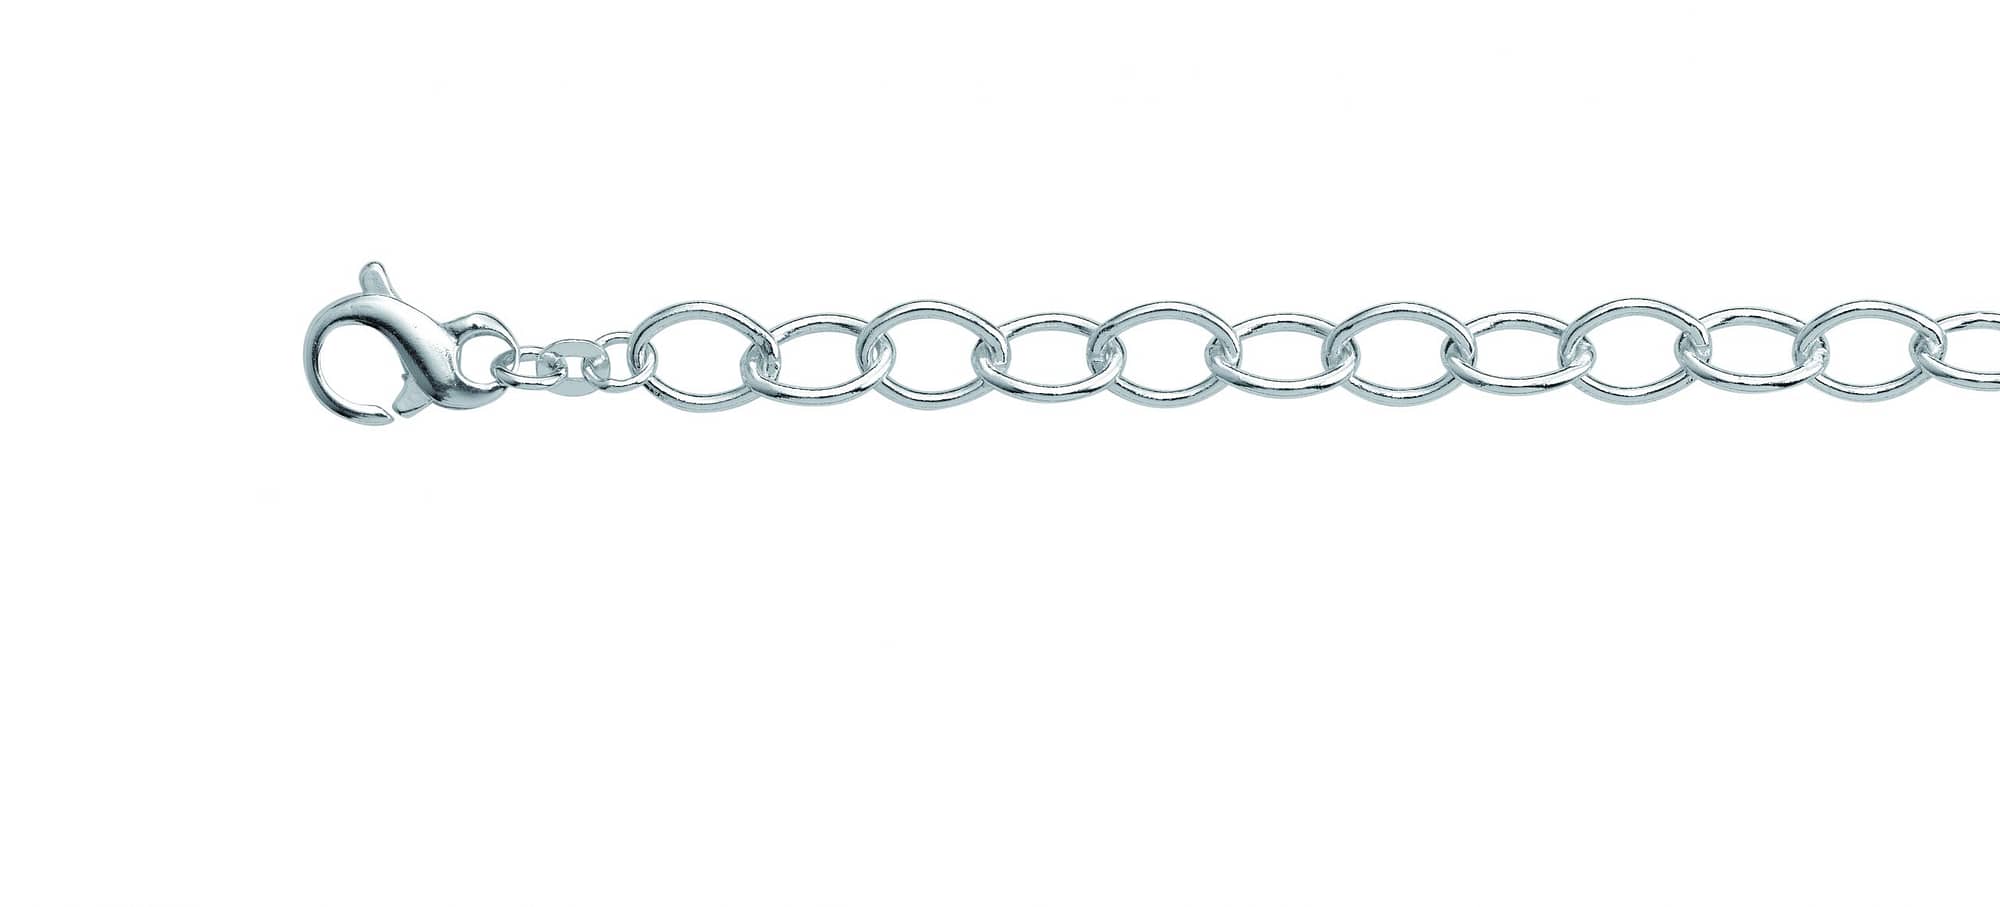 sterling silver oval cable bracelet